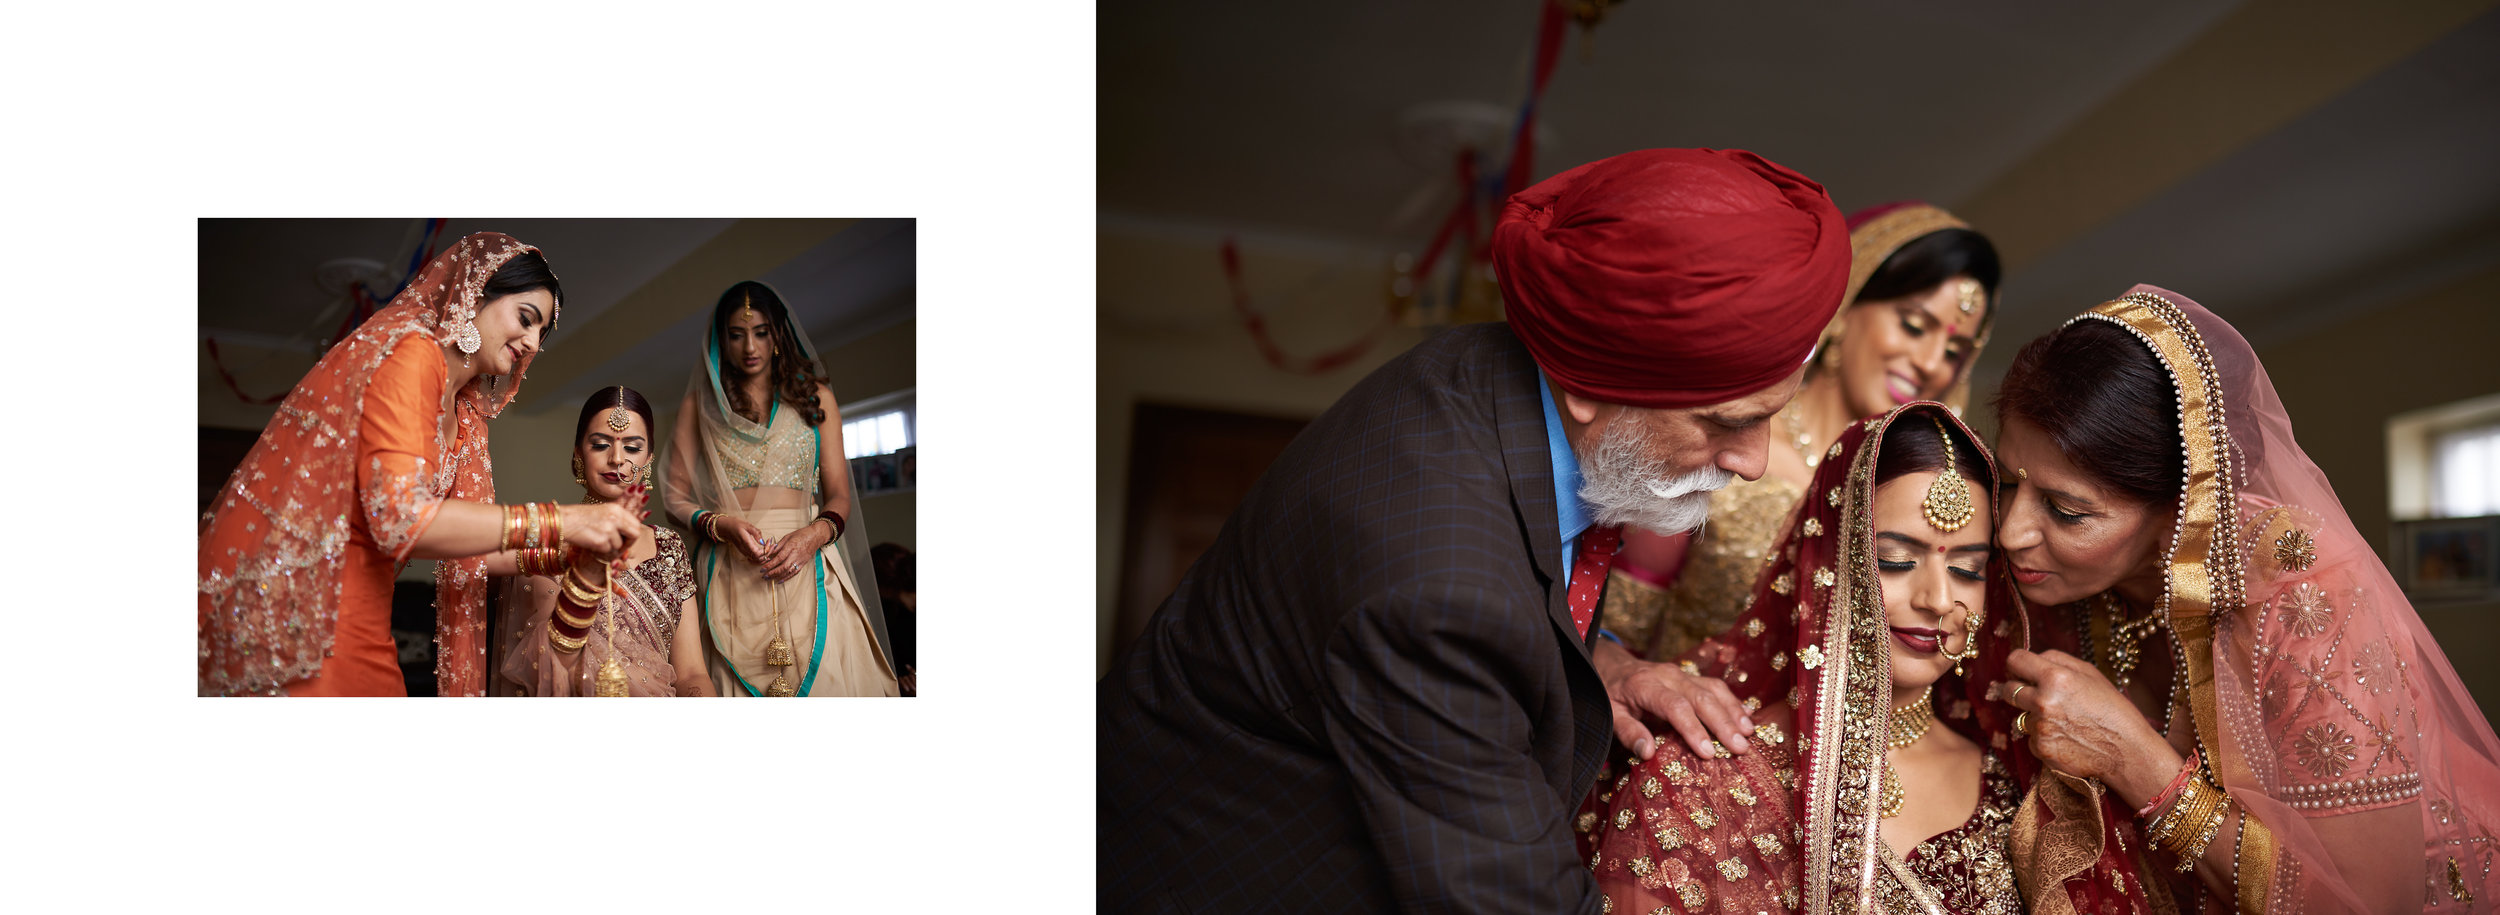 Sikh Wedding Album spread 9 - brides family putting chunni on